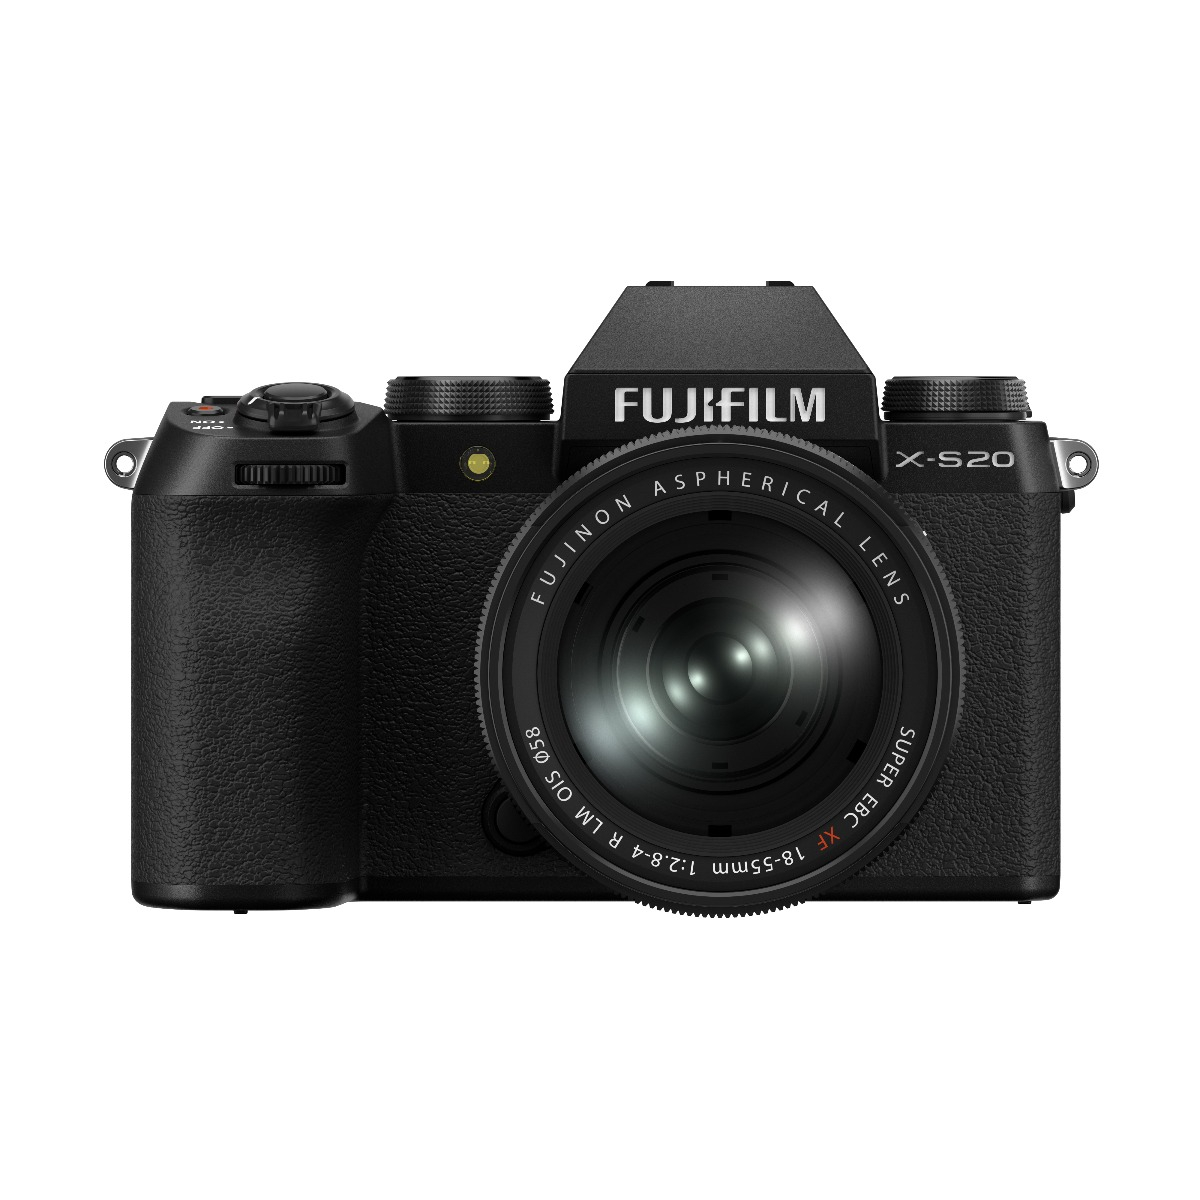 Dodd Camera - FUJIFILM X-S20 with XF 18-55mm F2.8-4 R LM OIS Lens Kit